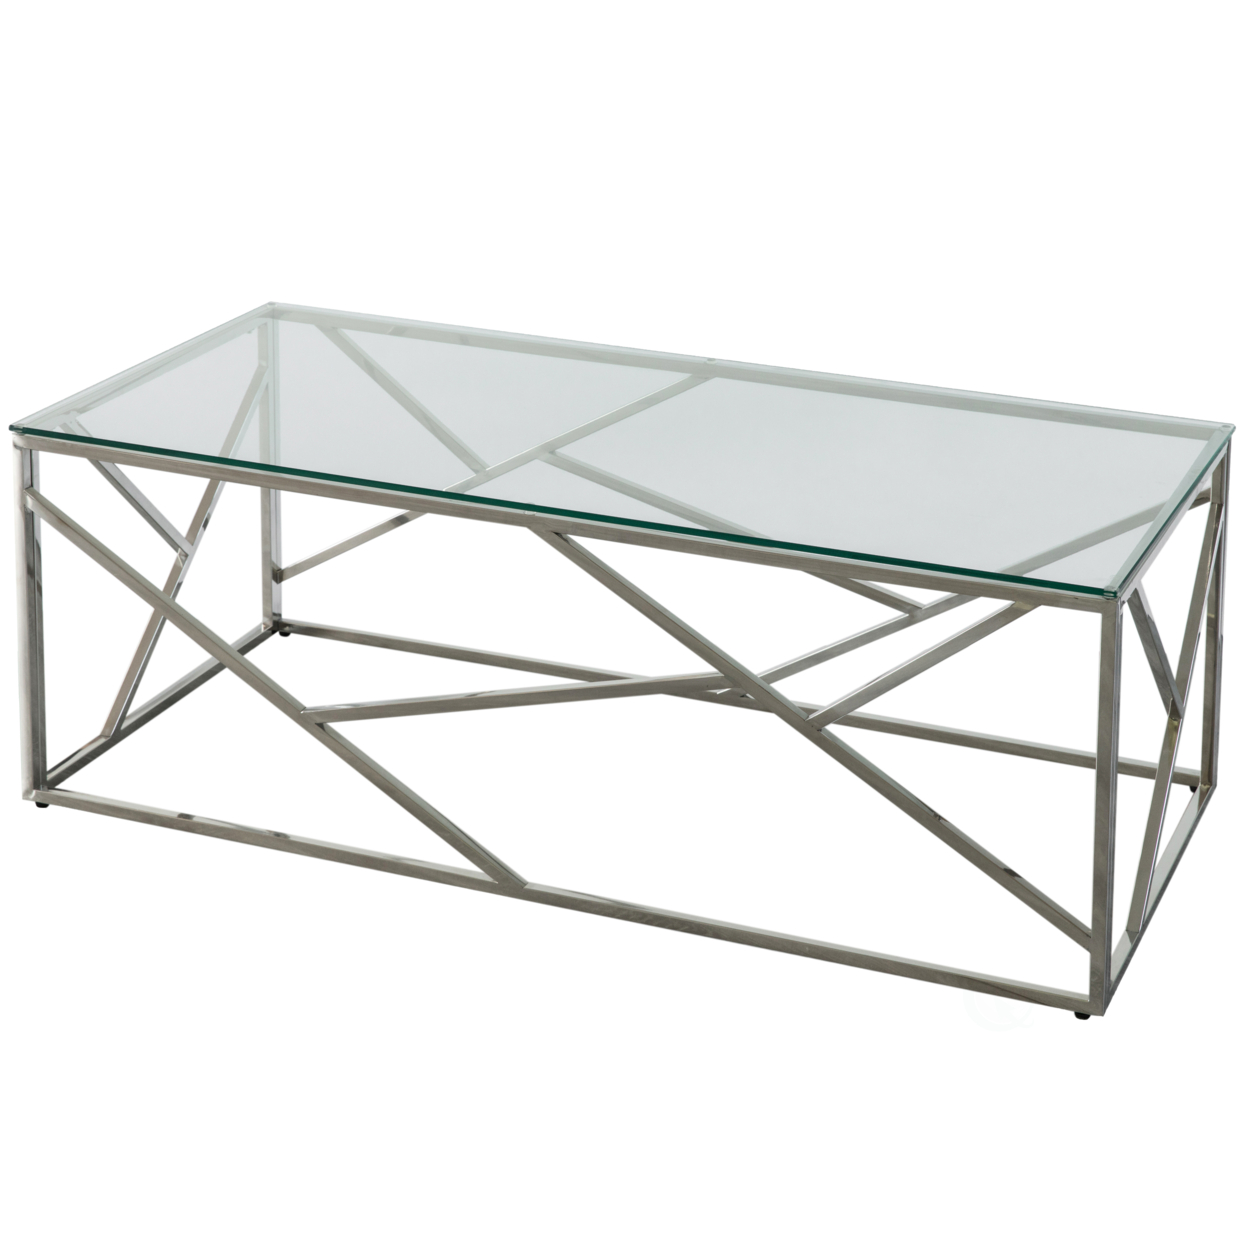 Decorative Rectangular Glass Top Metal Modern Coffee Table - silver